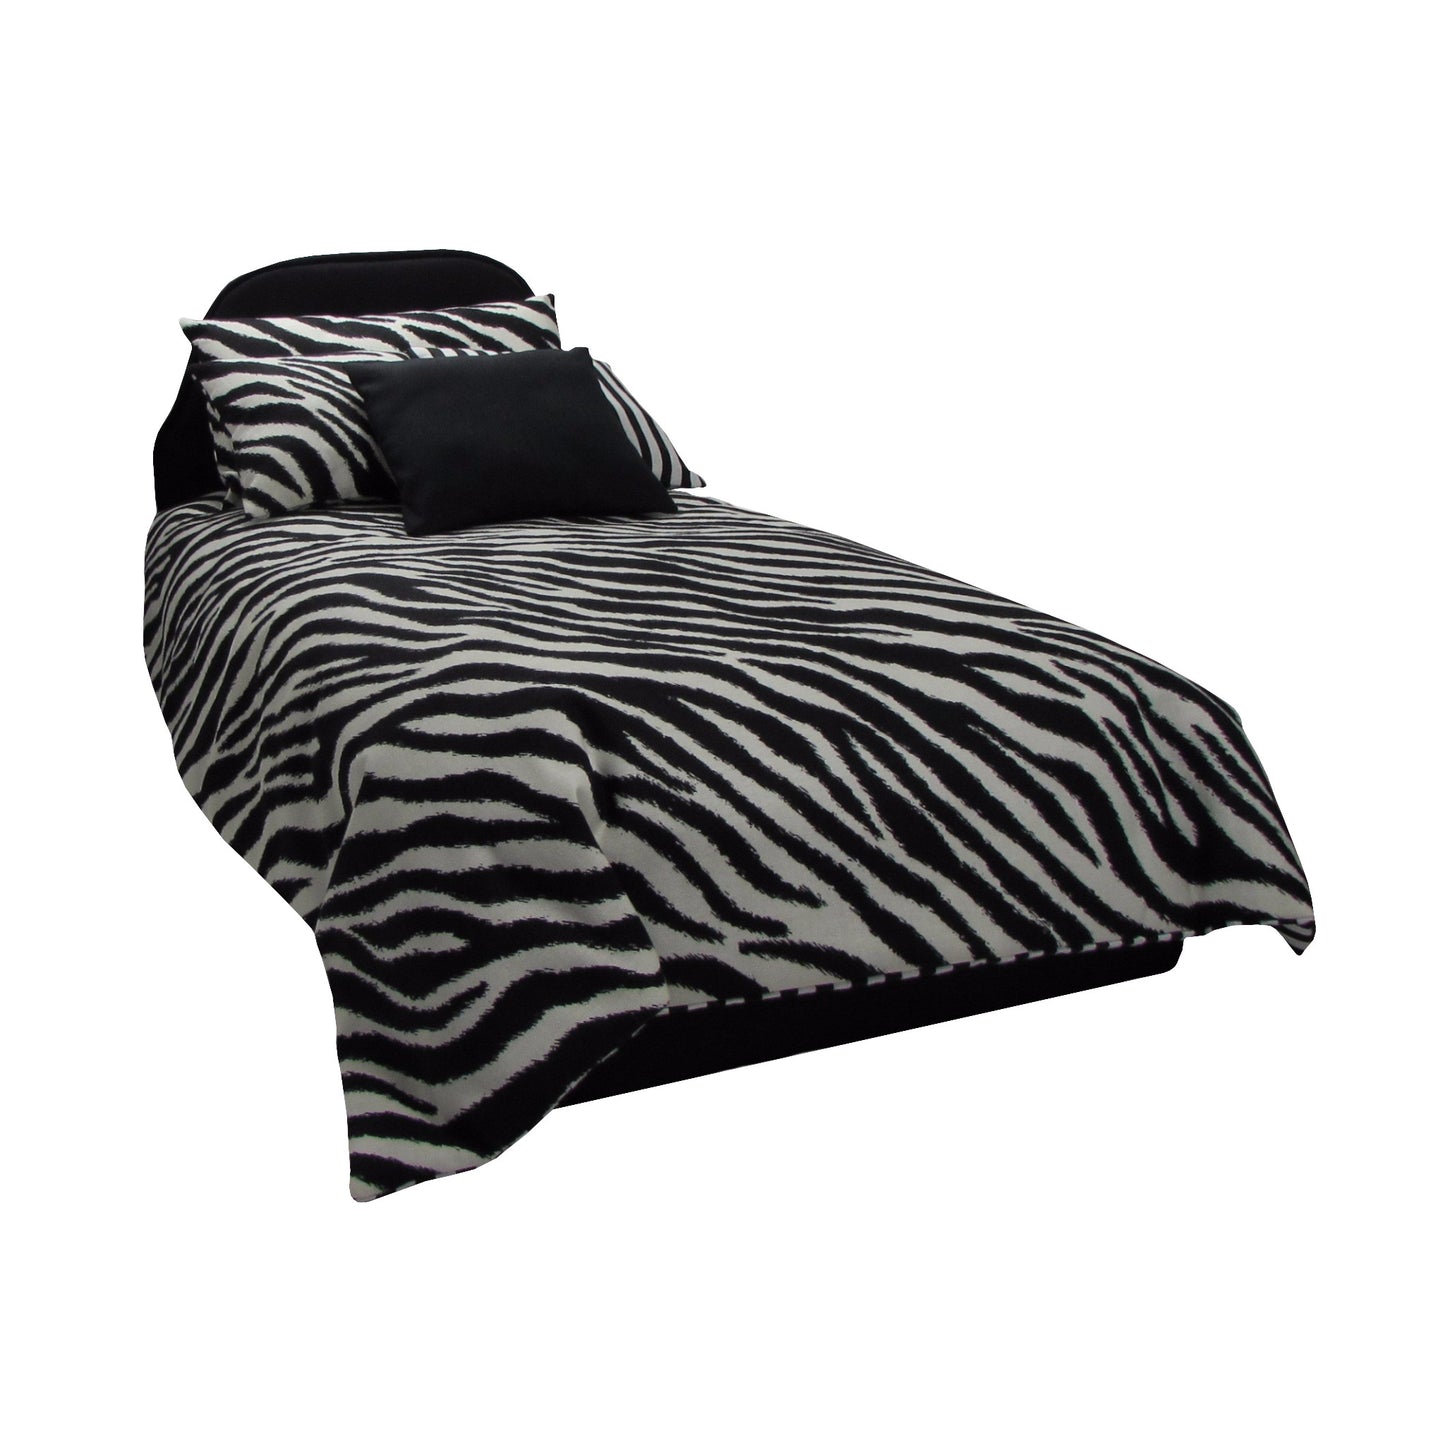 Zebra Doll Comforter Set and Black Upholstered Doll Bed for 18-inch dolls